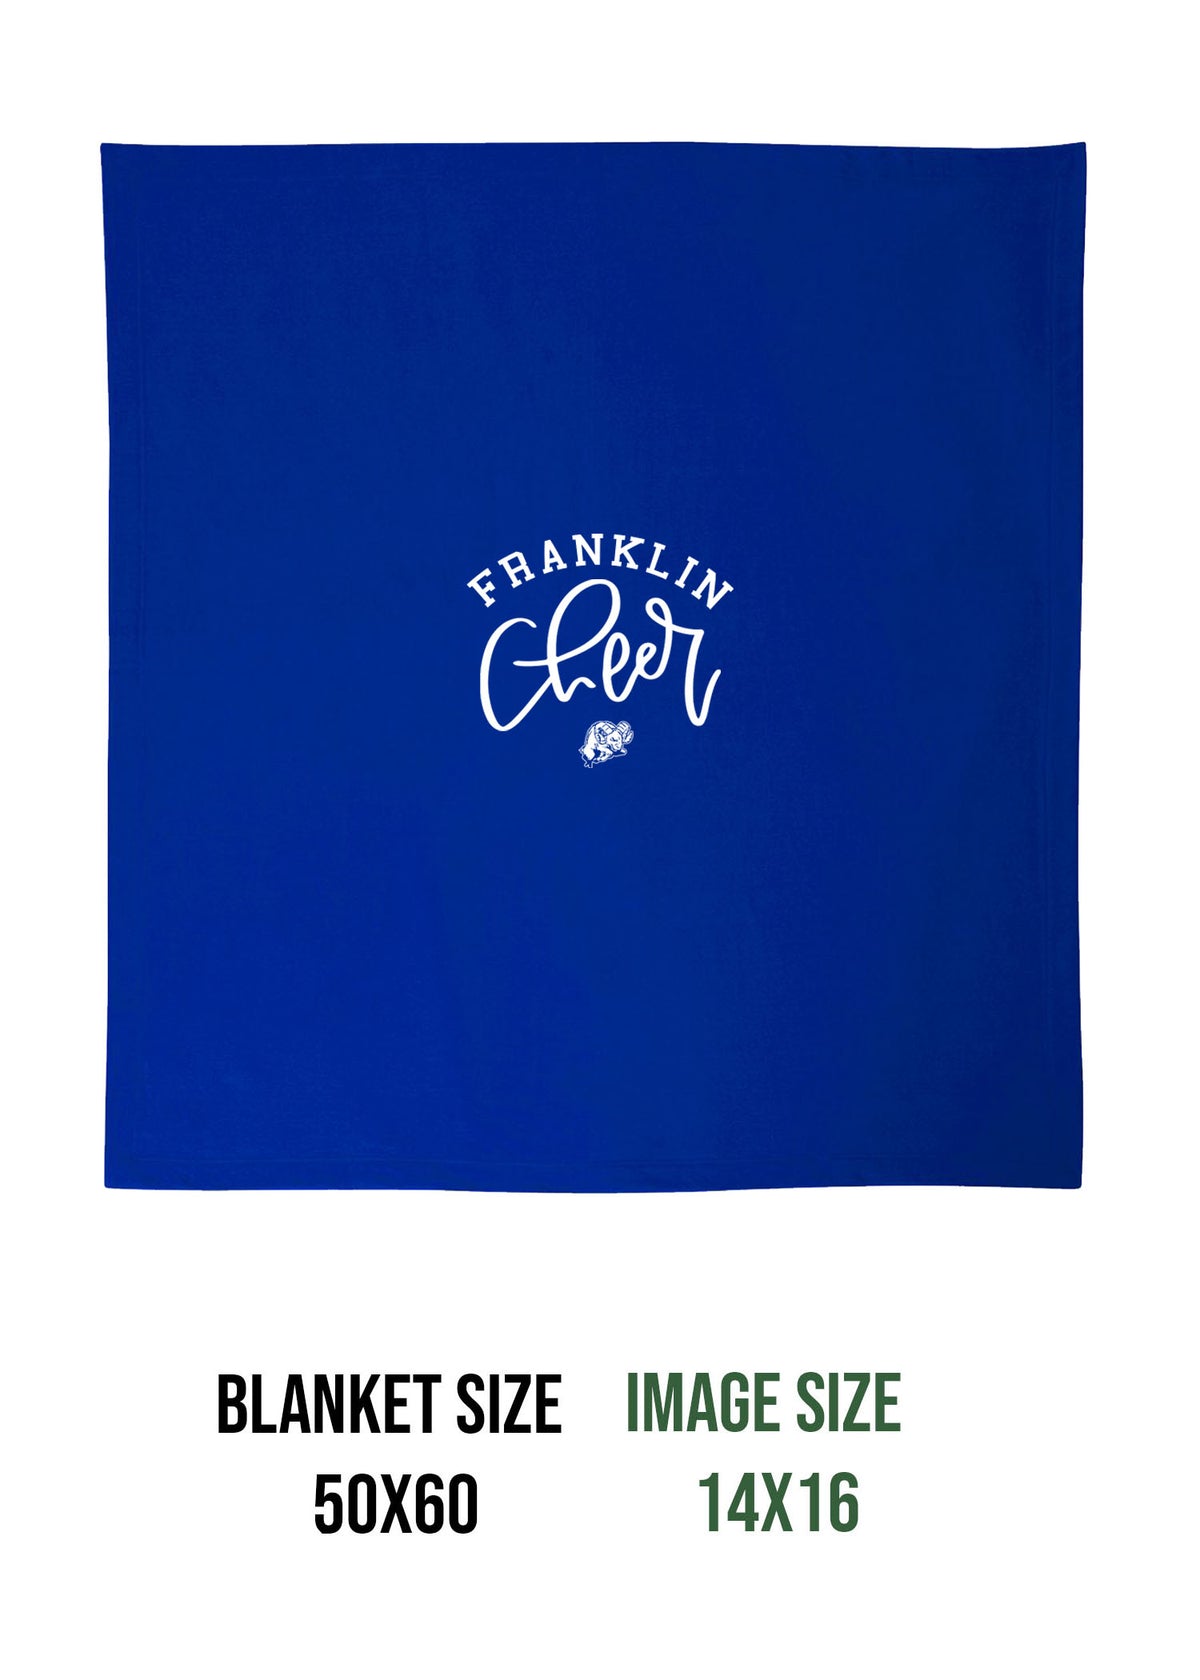 Franklin Cheer Design 3 Blanket